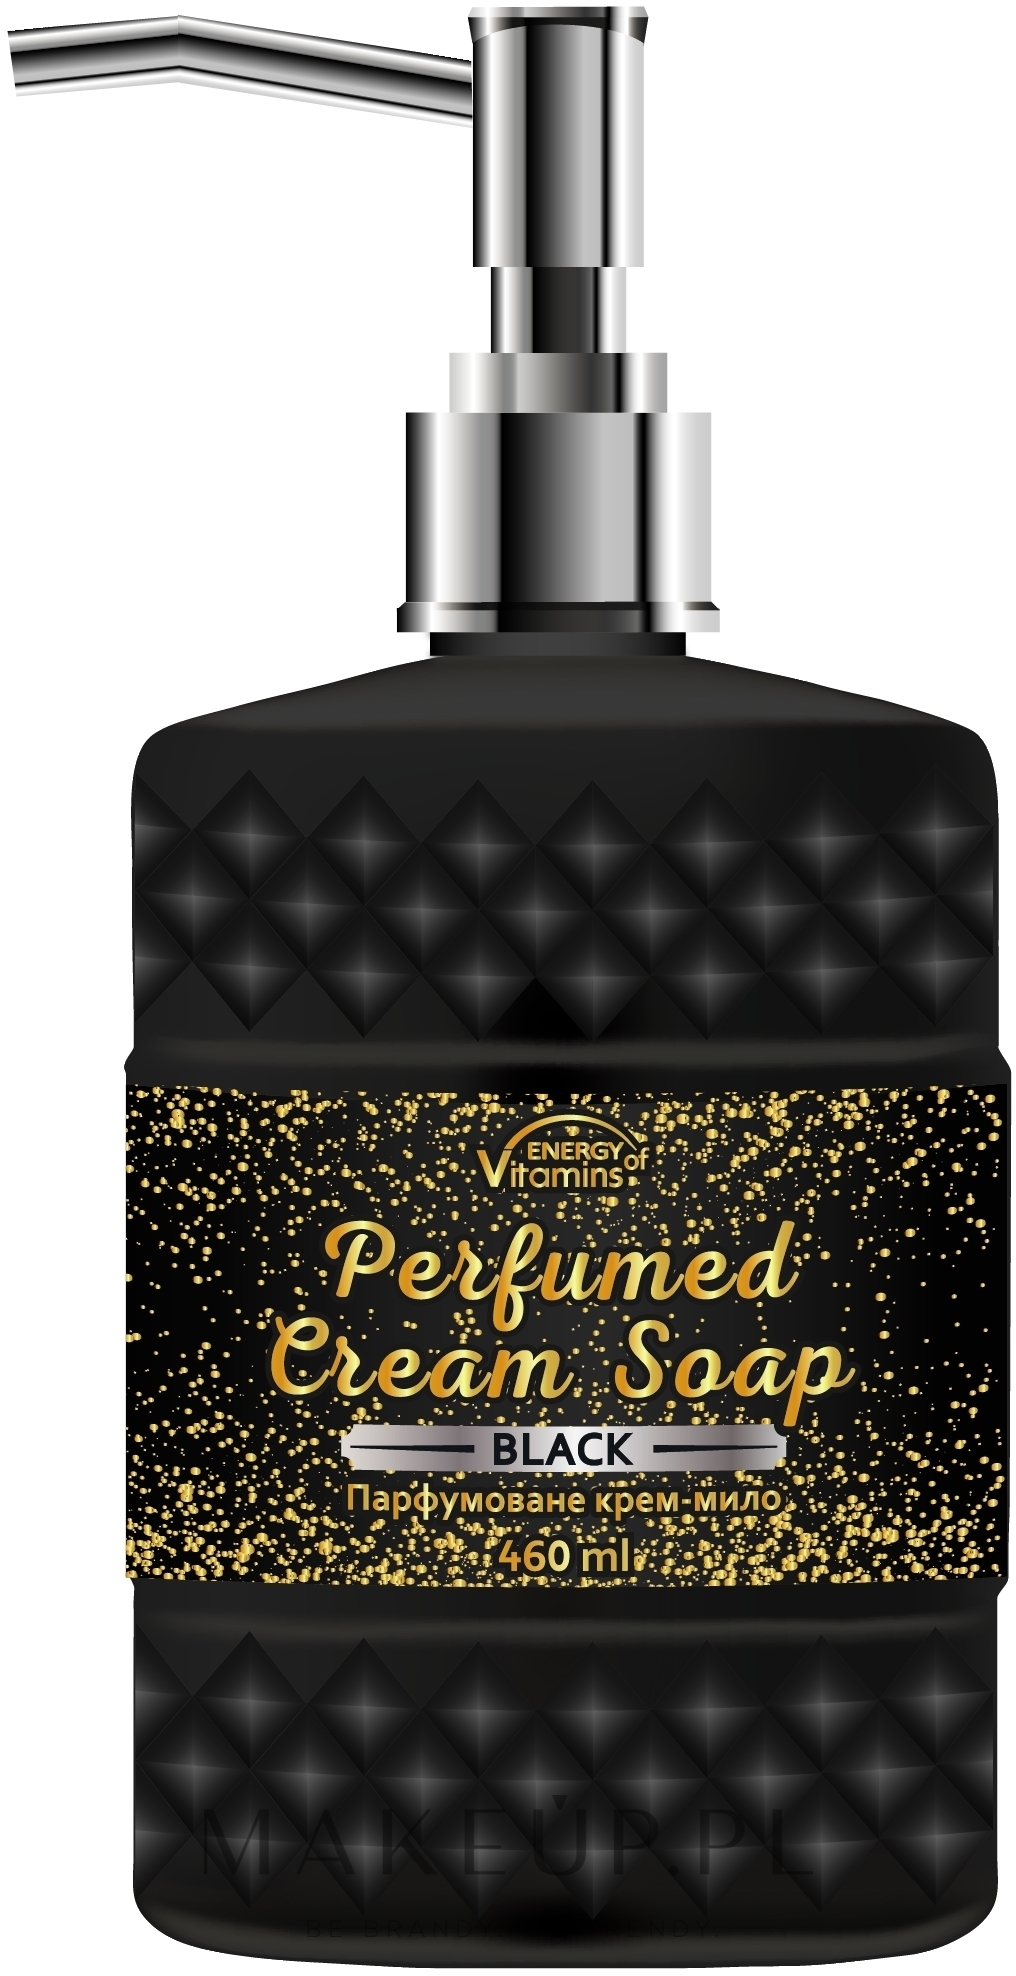 Perfumowane kremowe mydło do ciała Black - Energy of Vitamins Perfumed Cream Soap — Zdjęcie 460 ml